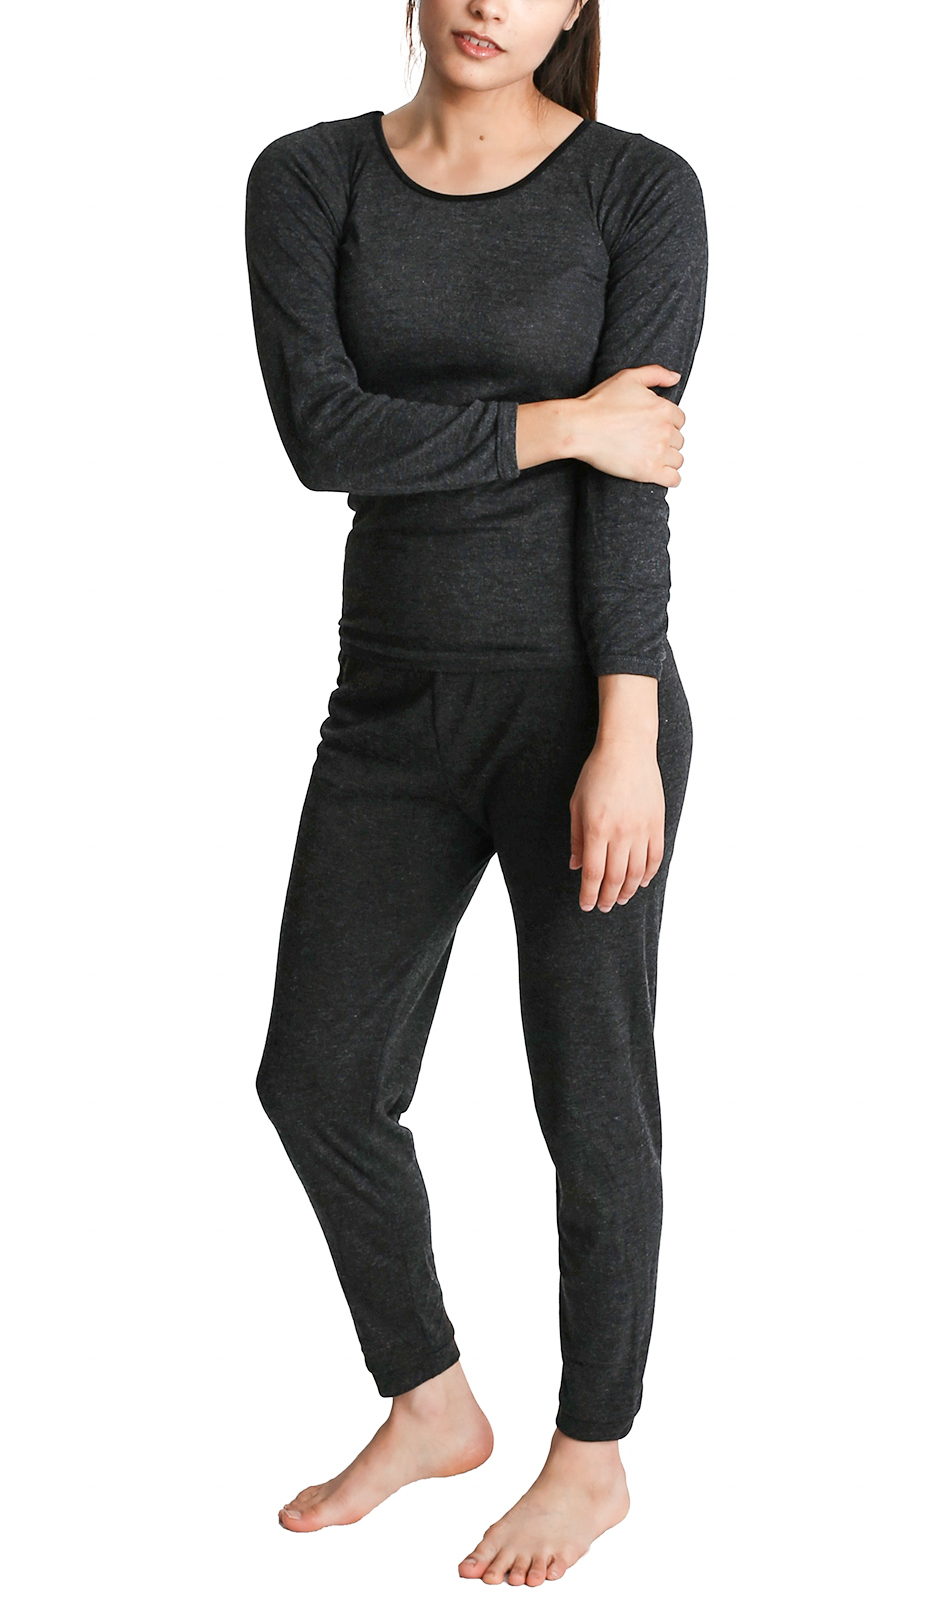 2pcs Set Women's Merino Wool Underwear Leggings Pants & Top Thermal Thermals eBay